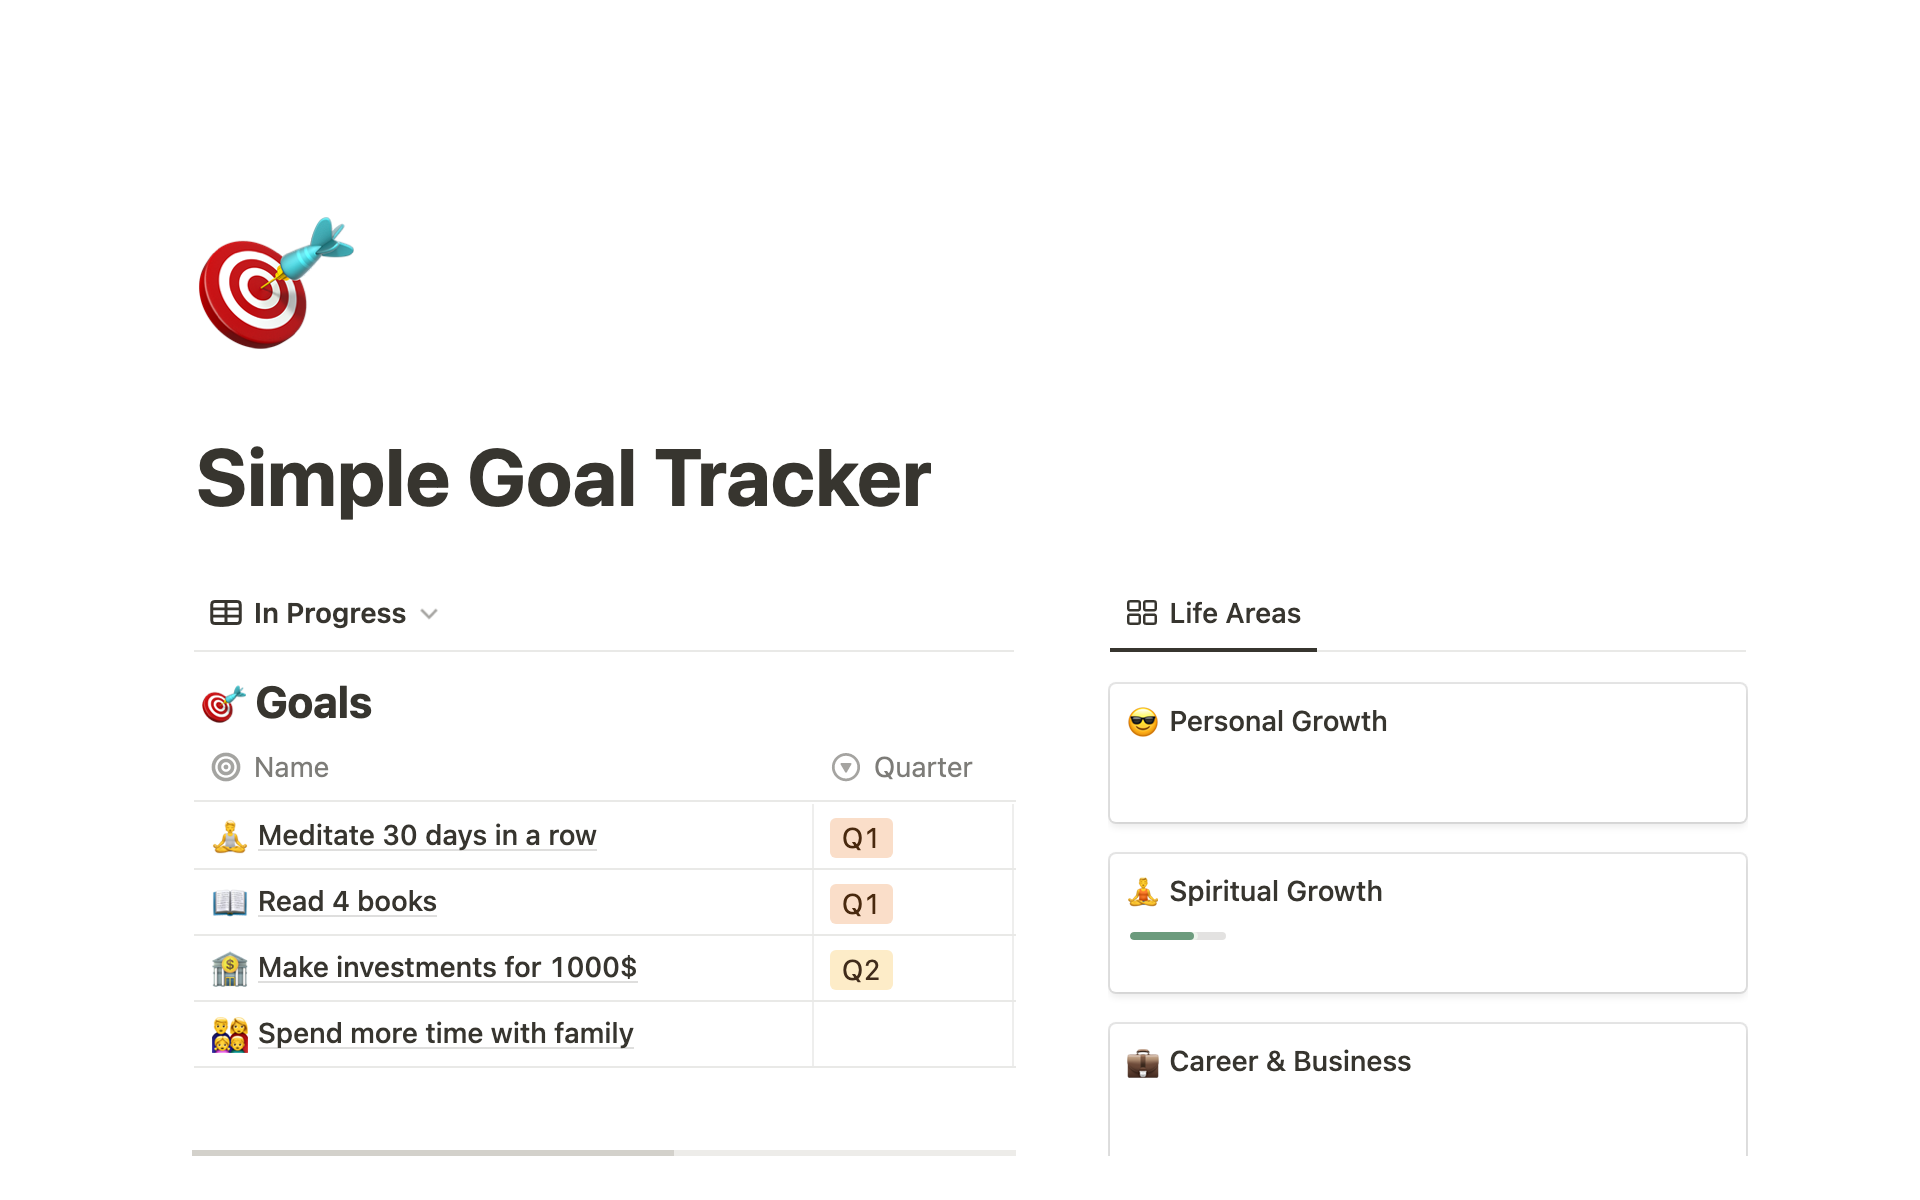 Vista previa de plantilla para Simple Goal Tracker